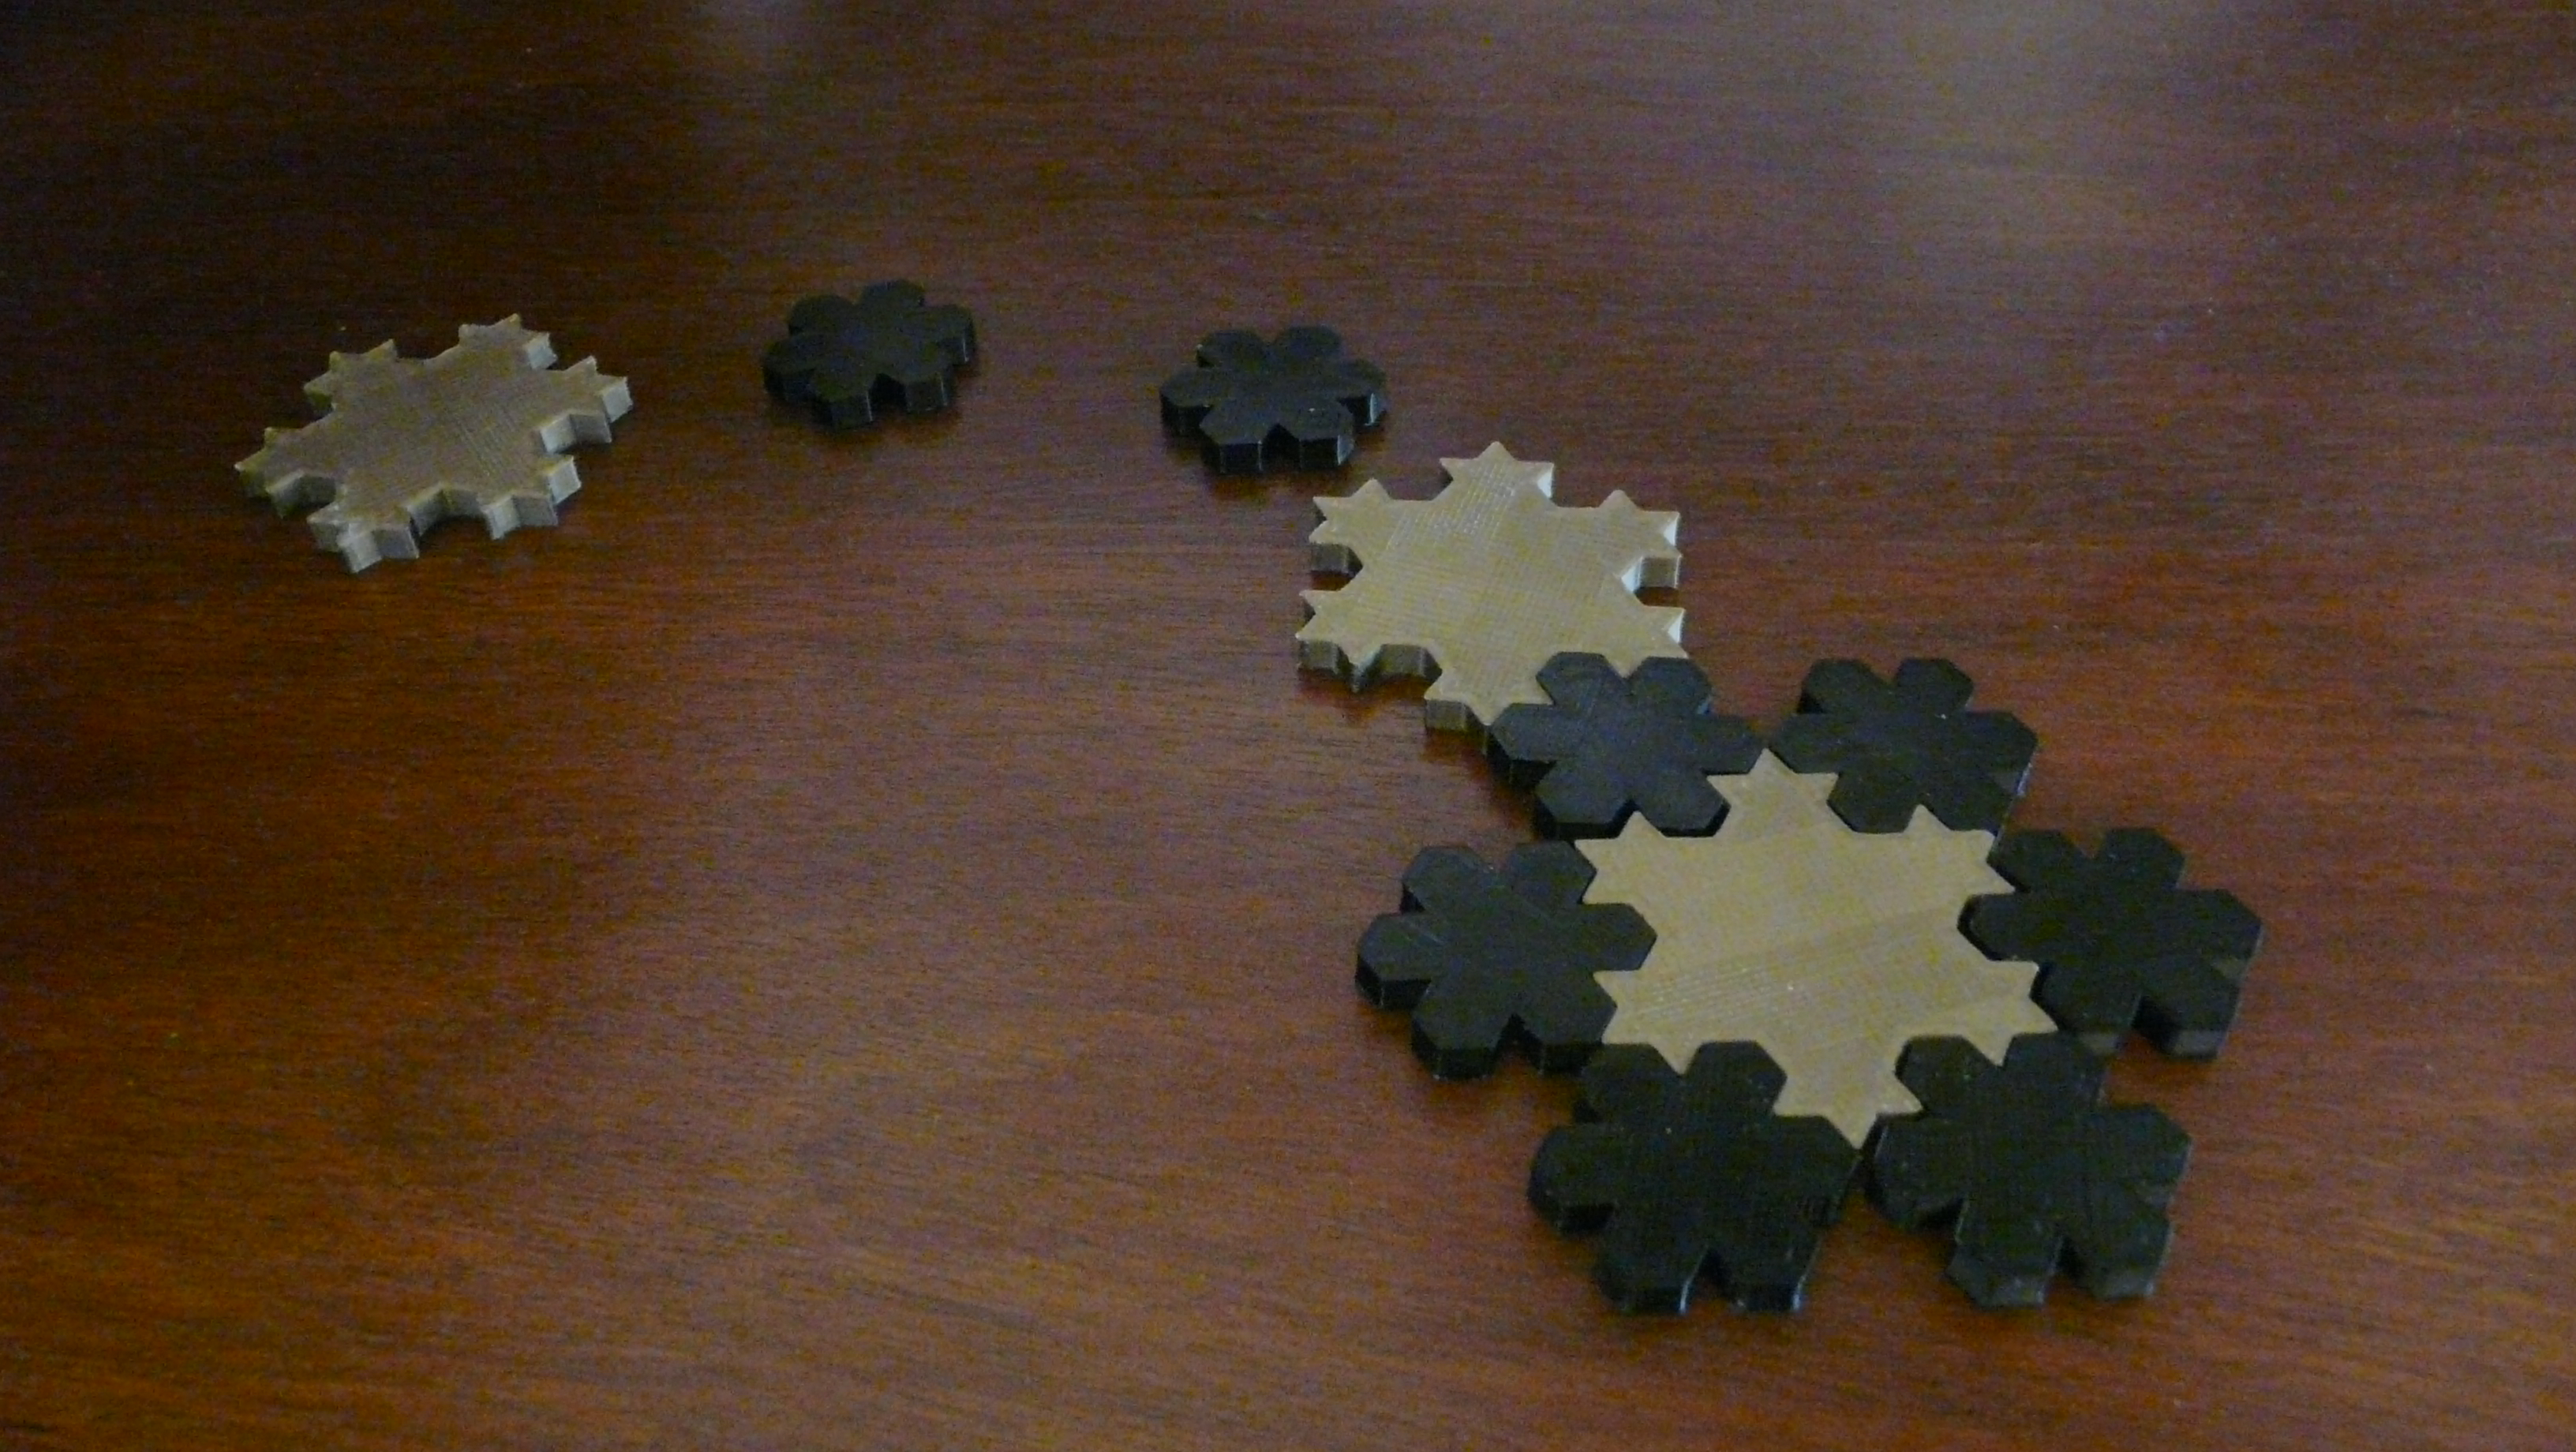  Infinite Puzzle - Koch Snowflakes